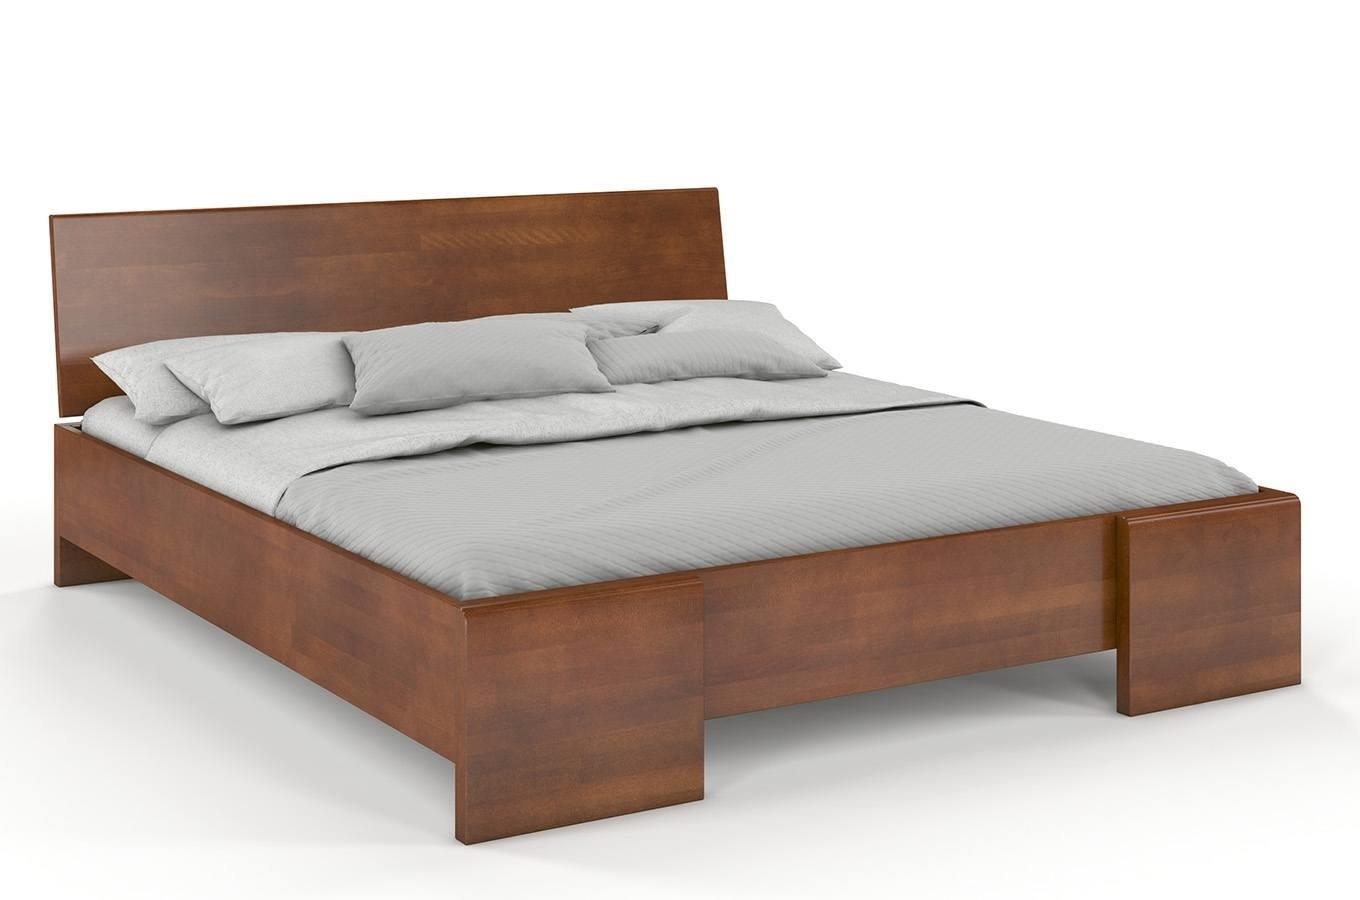 Łóżko drewniane bukowe Visby HESSLER High & LONG (długość + 20 cm) / 180x220 cm, kolor orzech